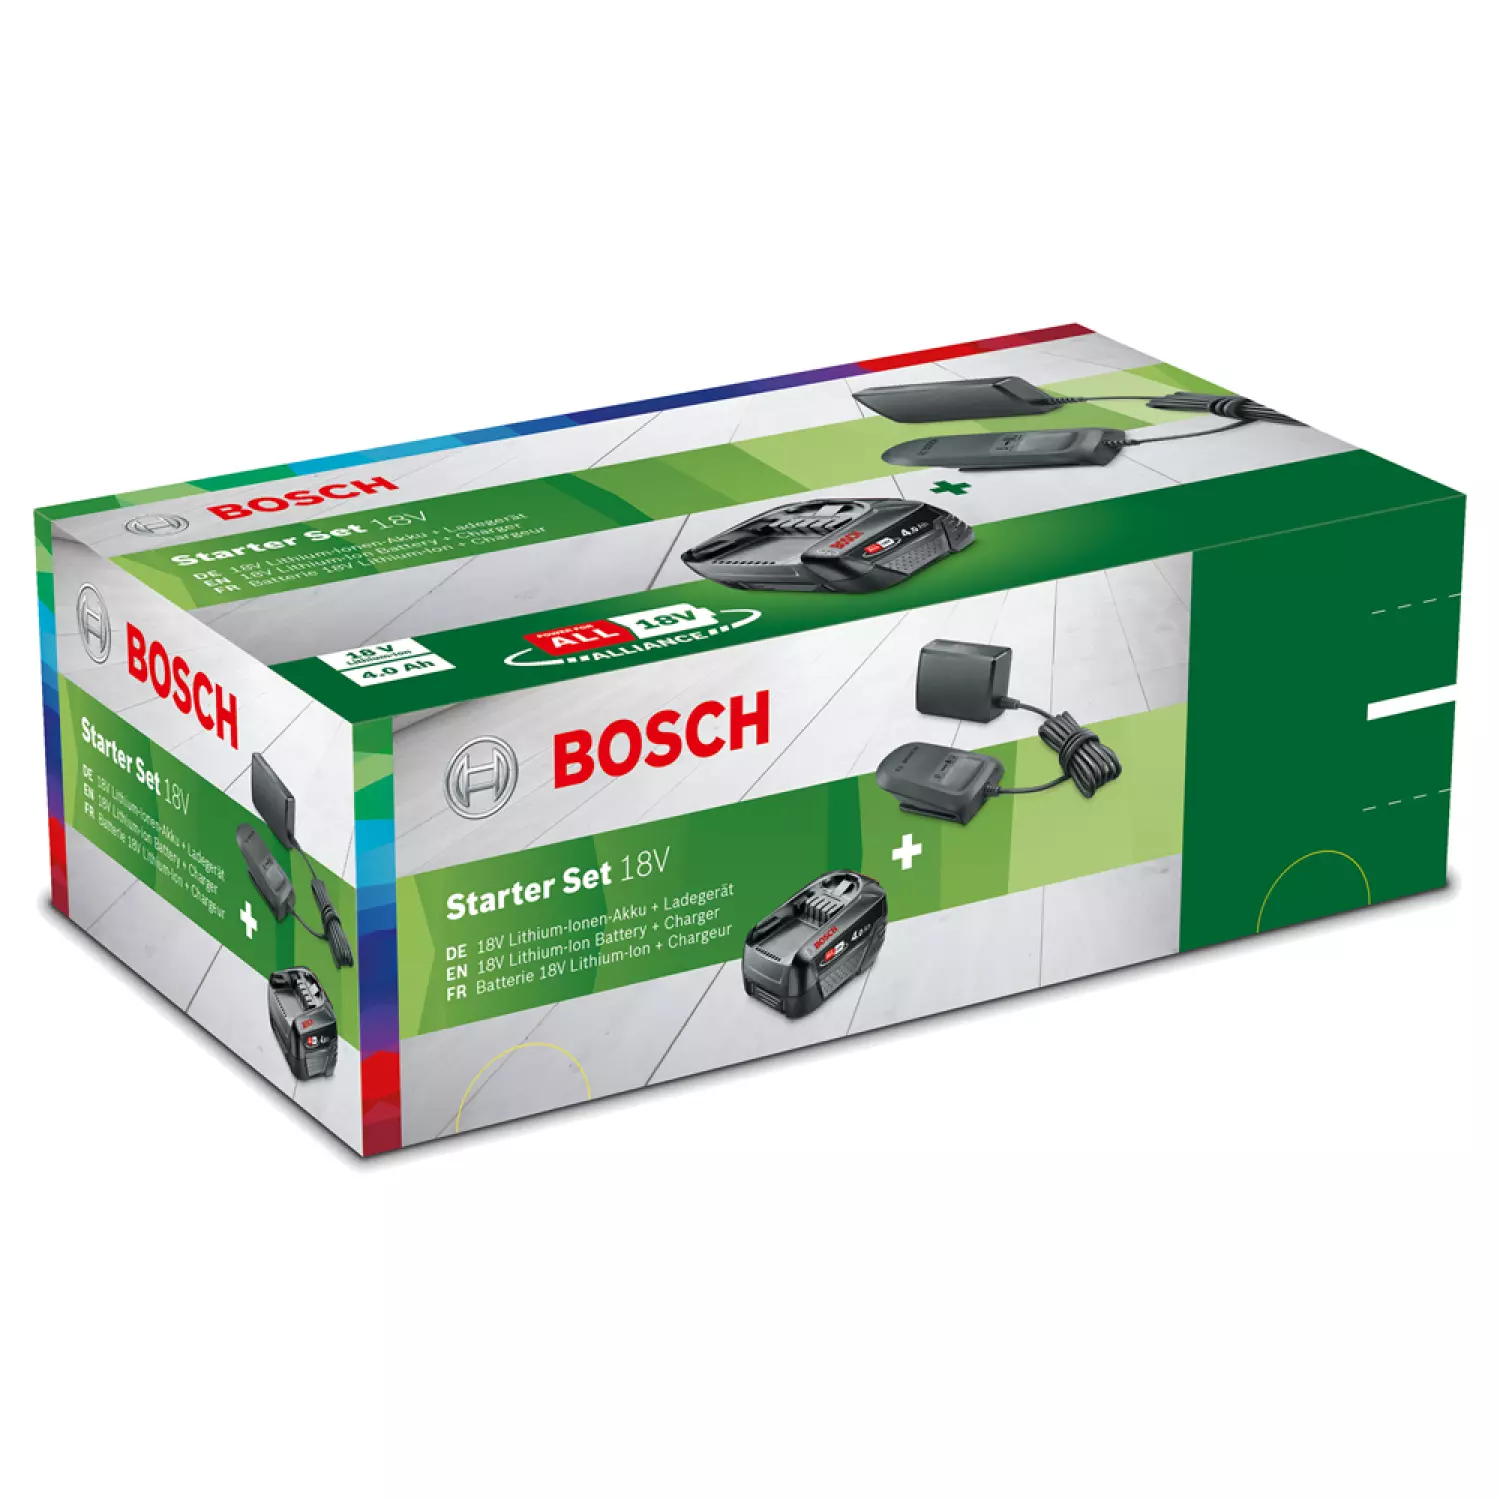 Bosch 18V Li-ion accu starterset (1x4.0Ah) + lader - 1600A024Z5